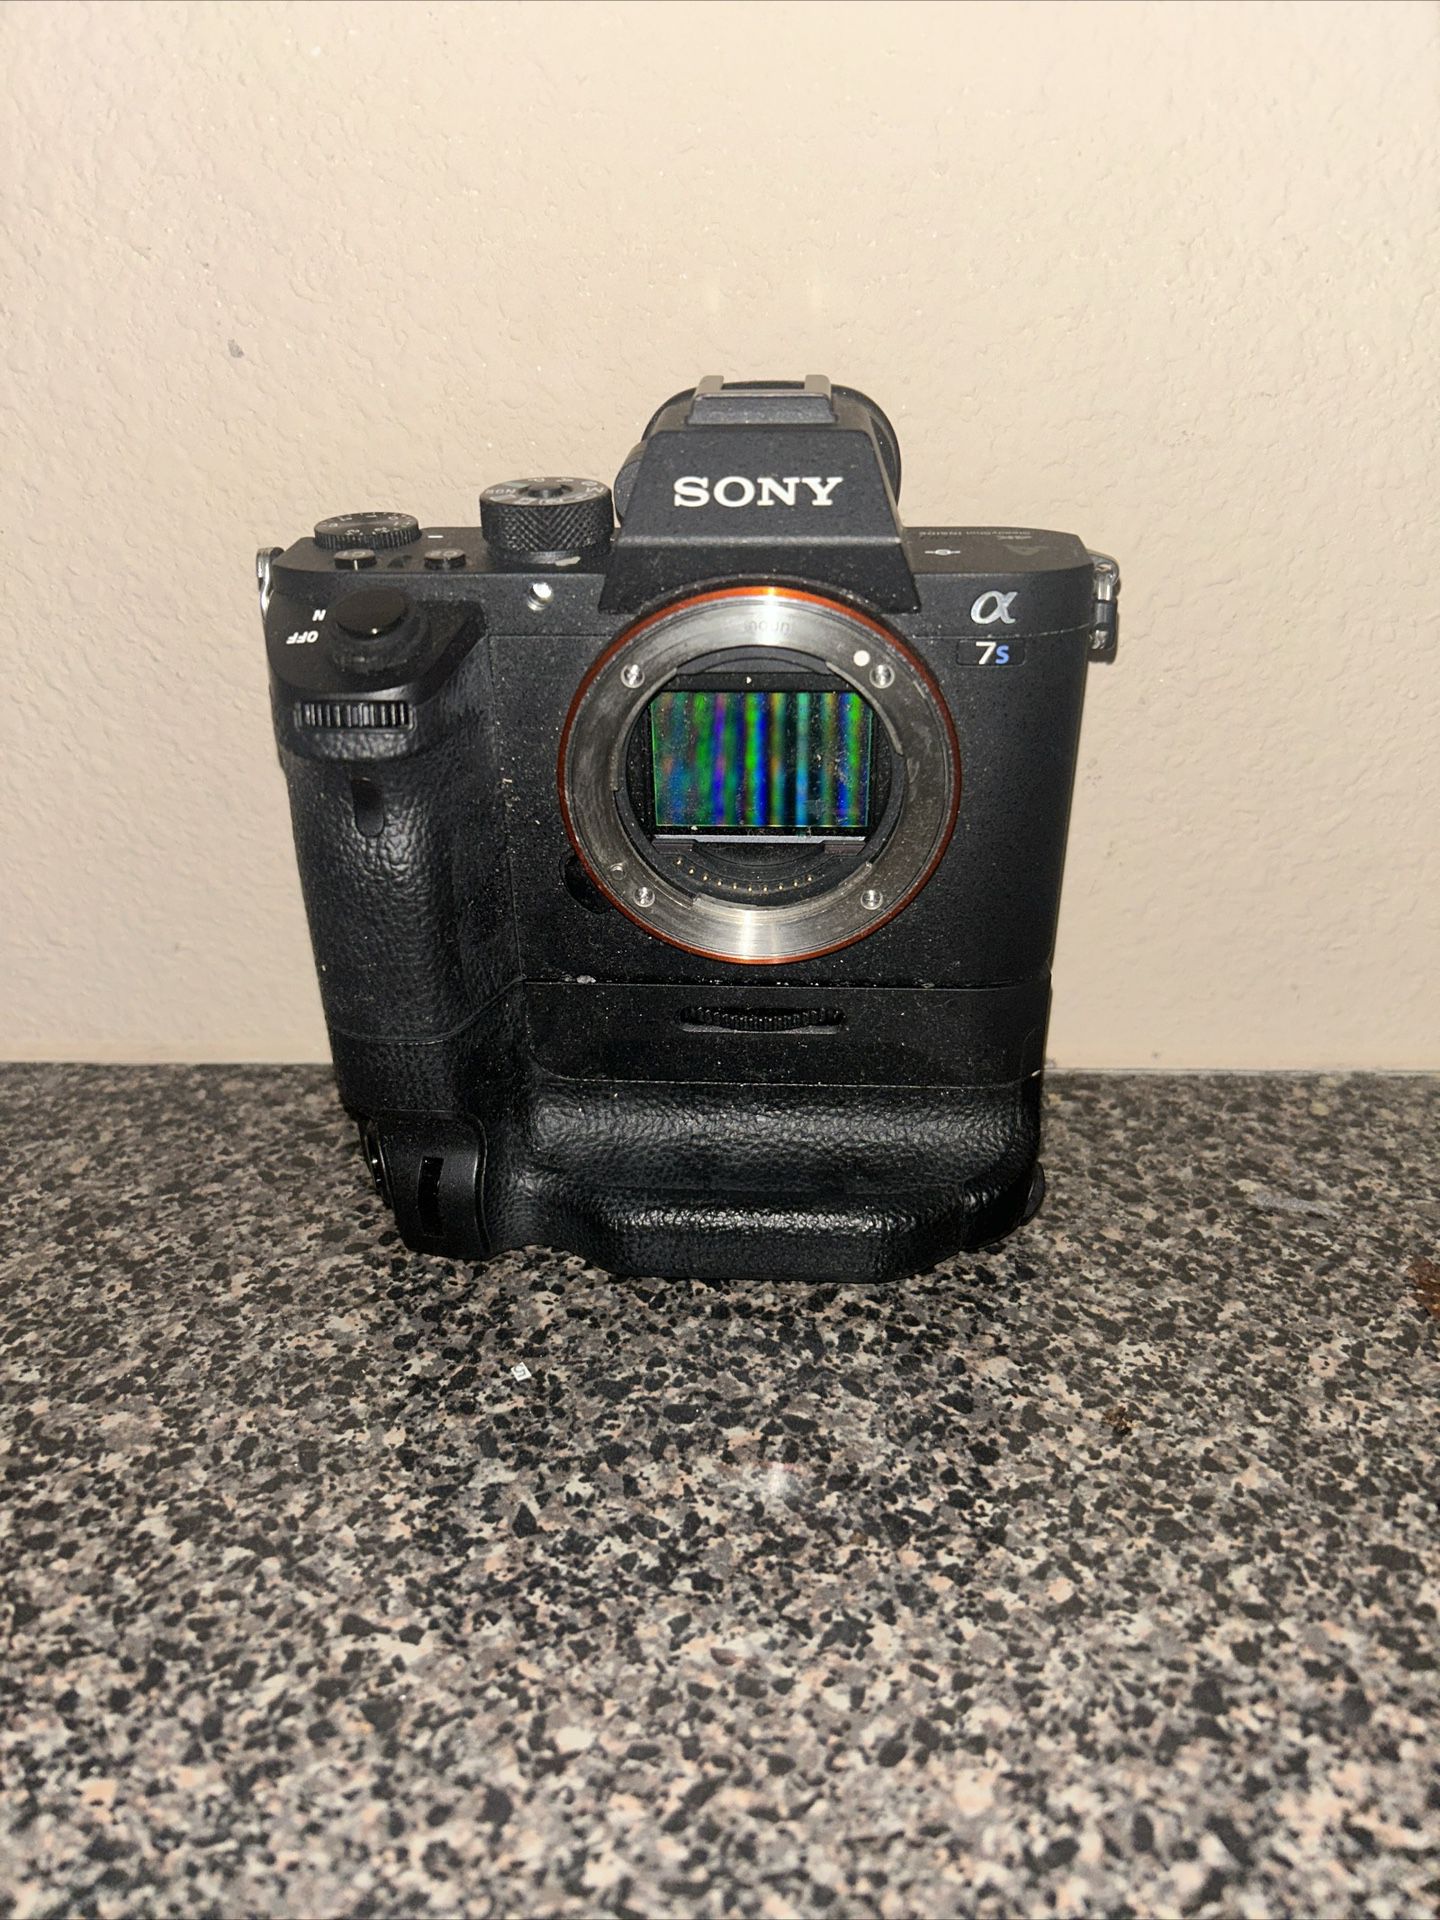  Sony - Alpha 7S II Full-frame Mirrorless Camera (Body Only) - Black